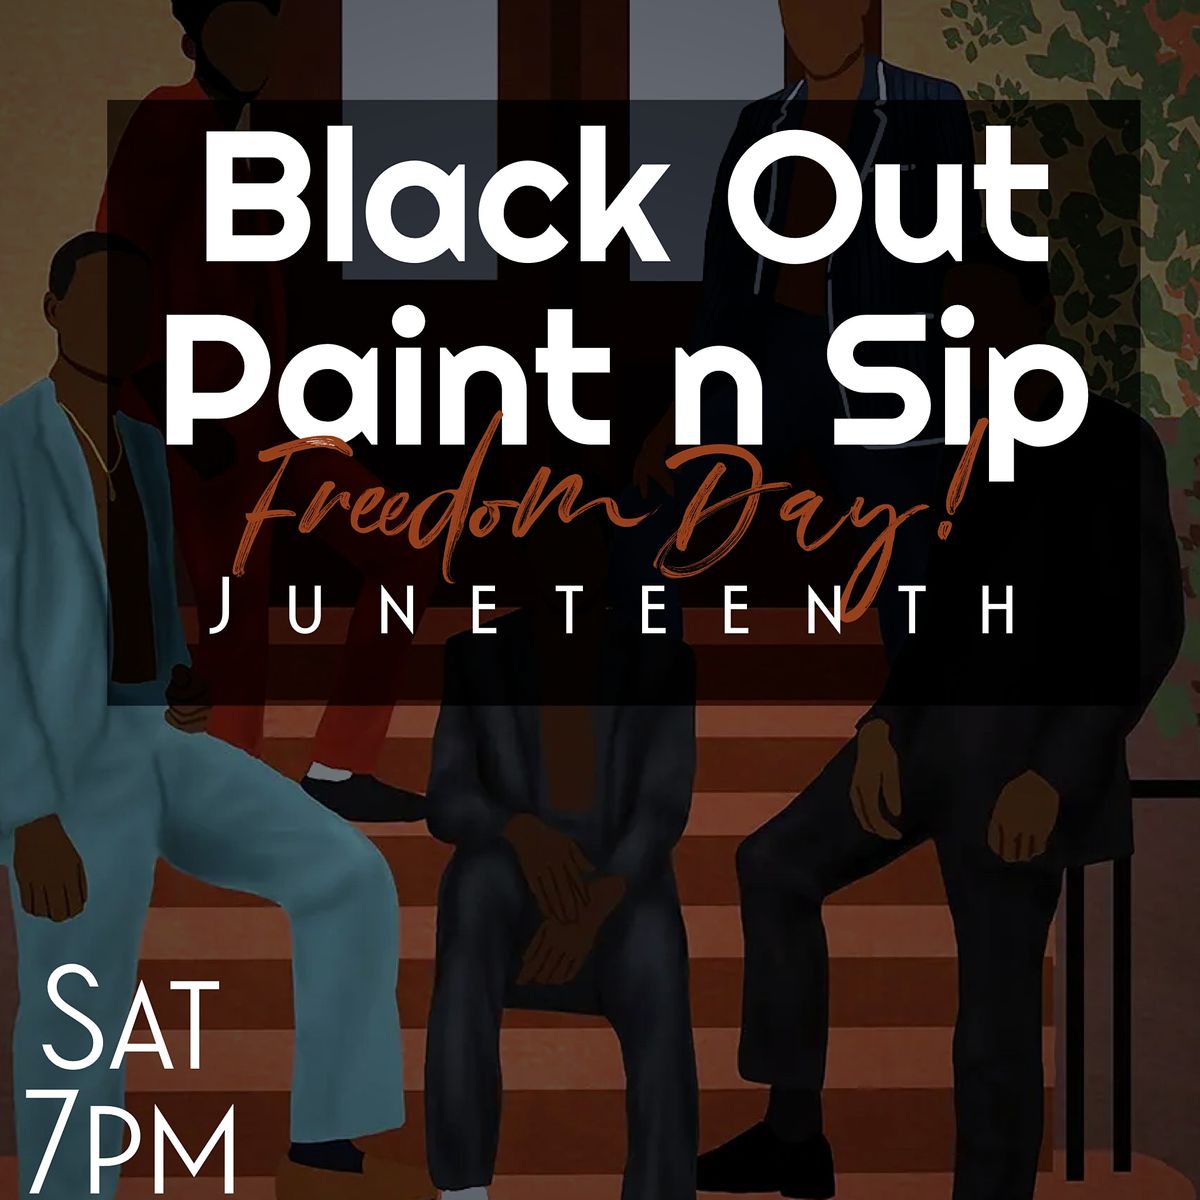 Black Out Paint & Sip party